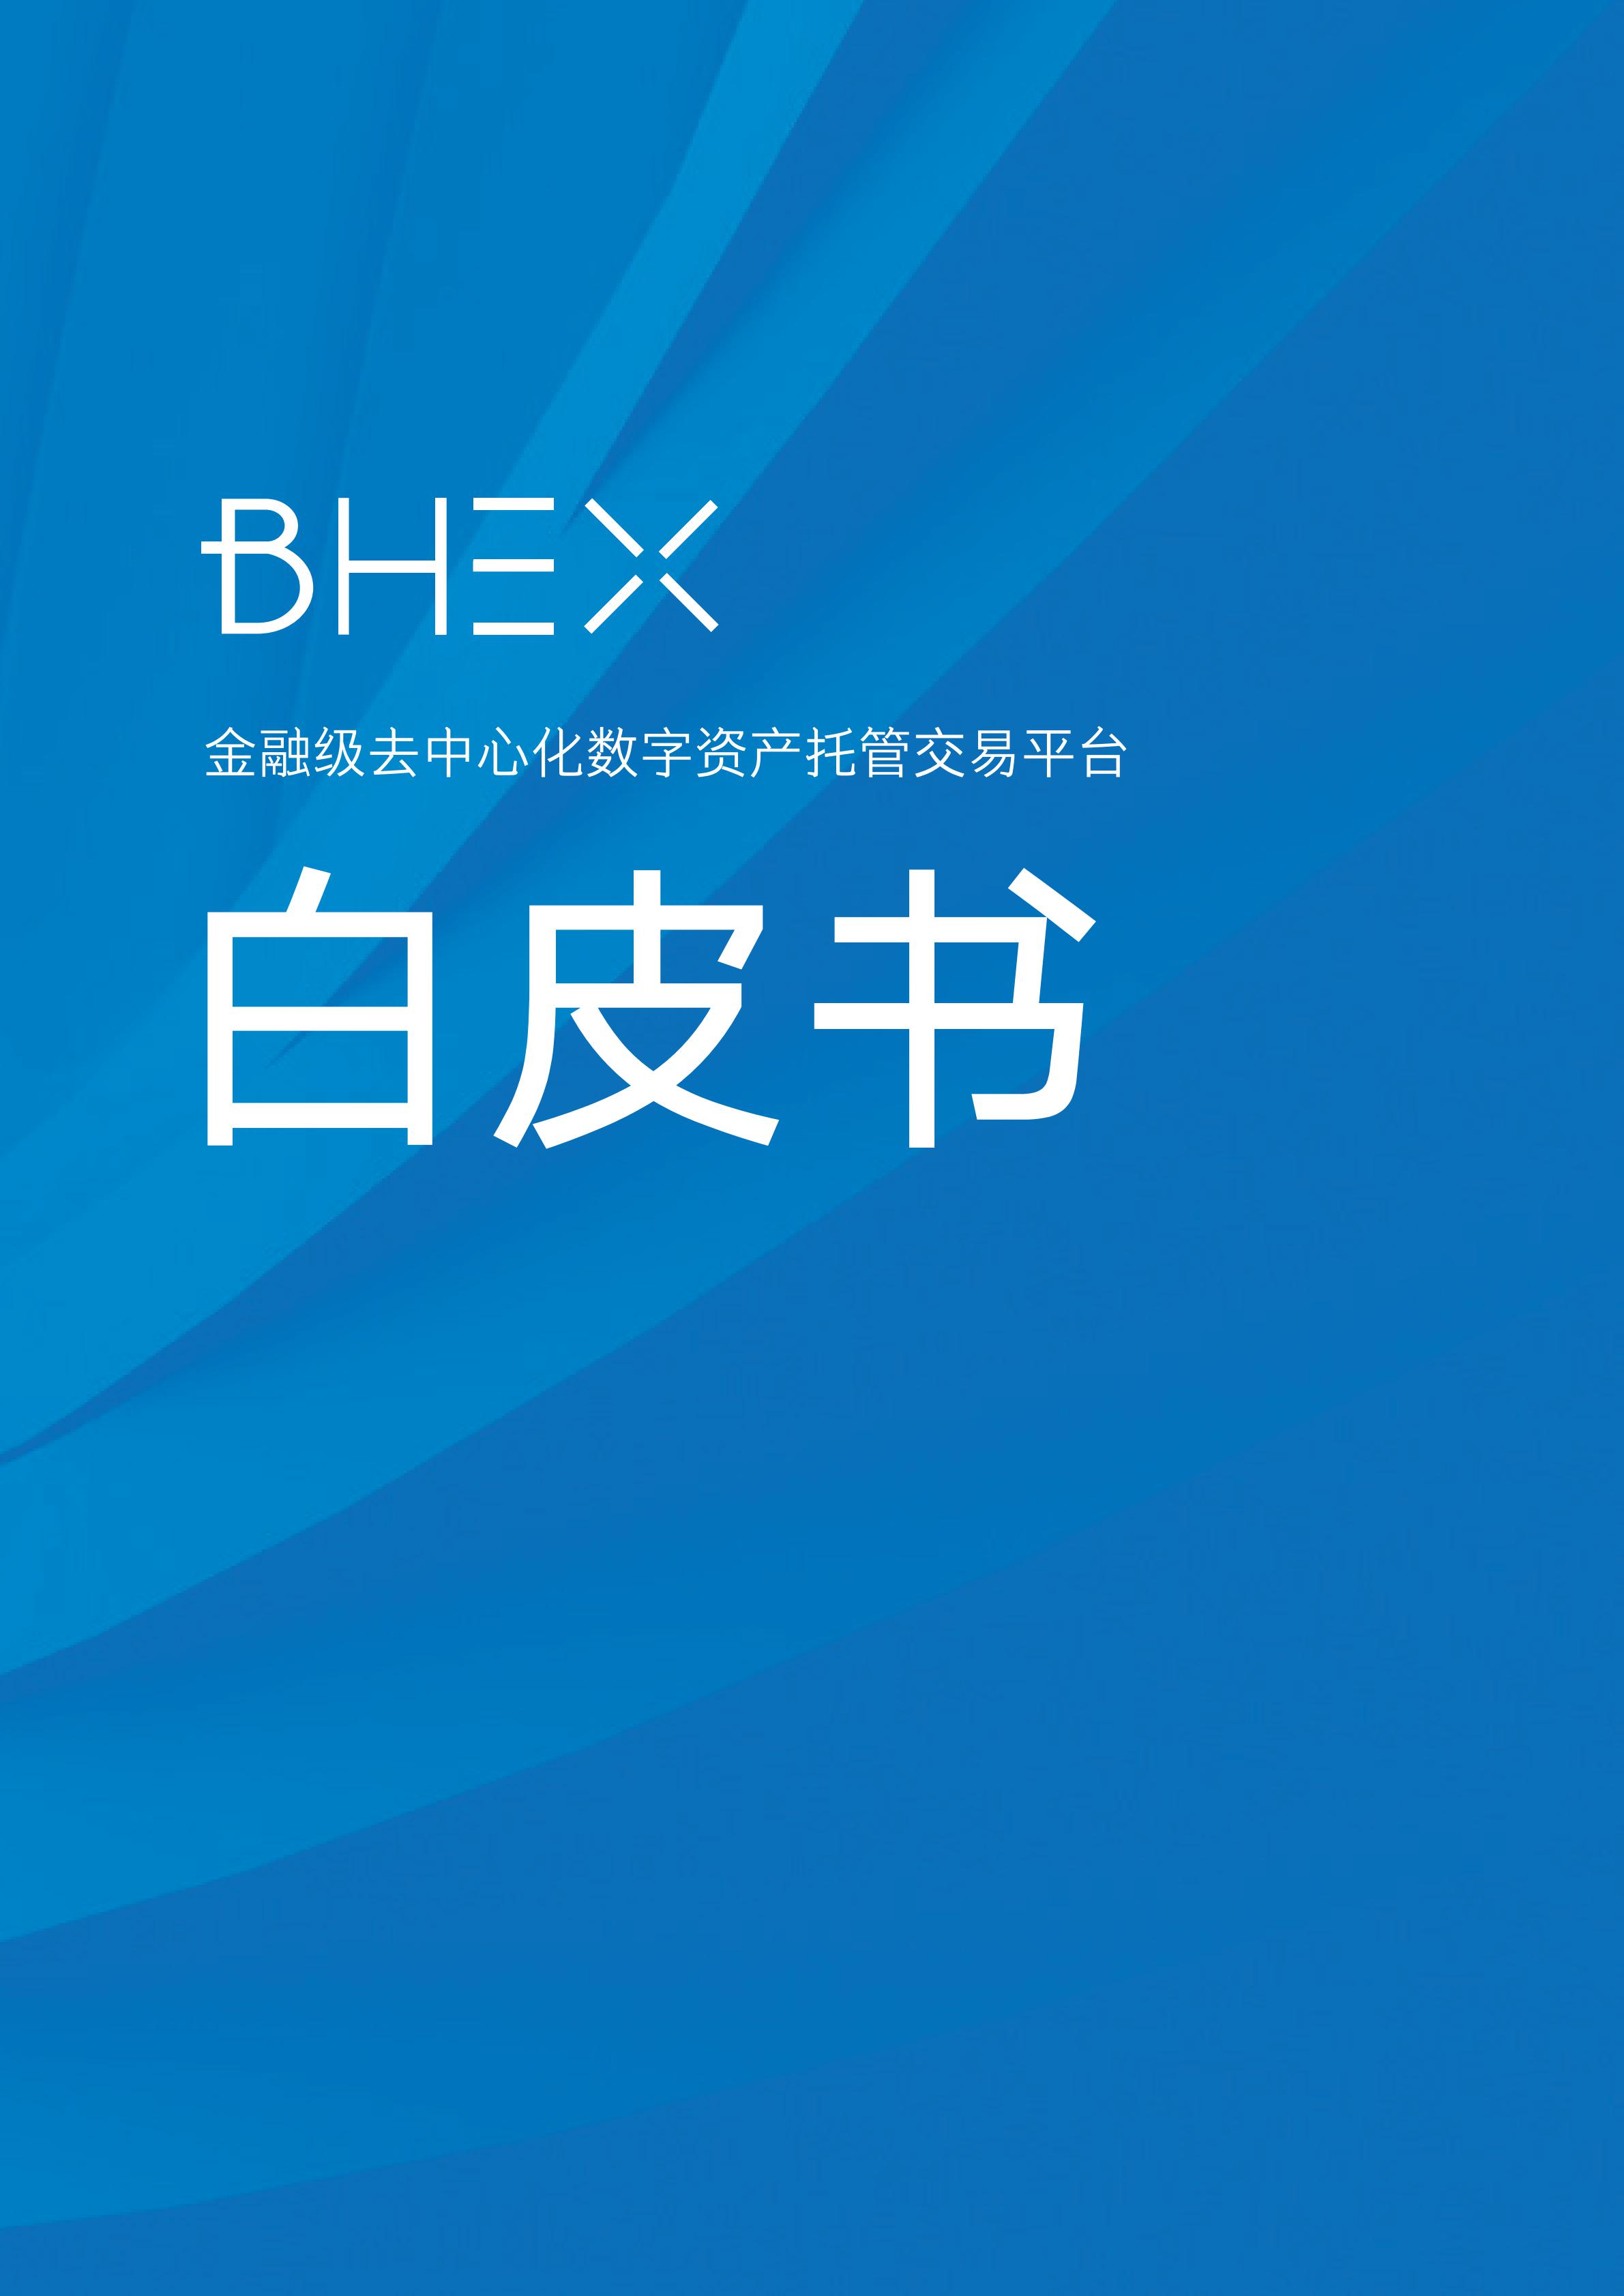 BHex_1.0_cn_00.jpg